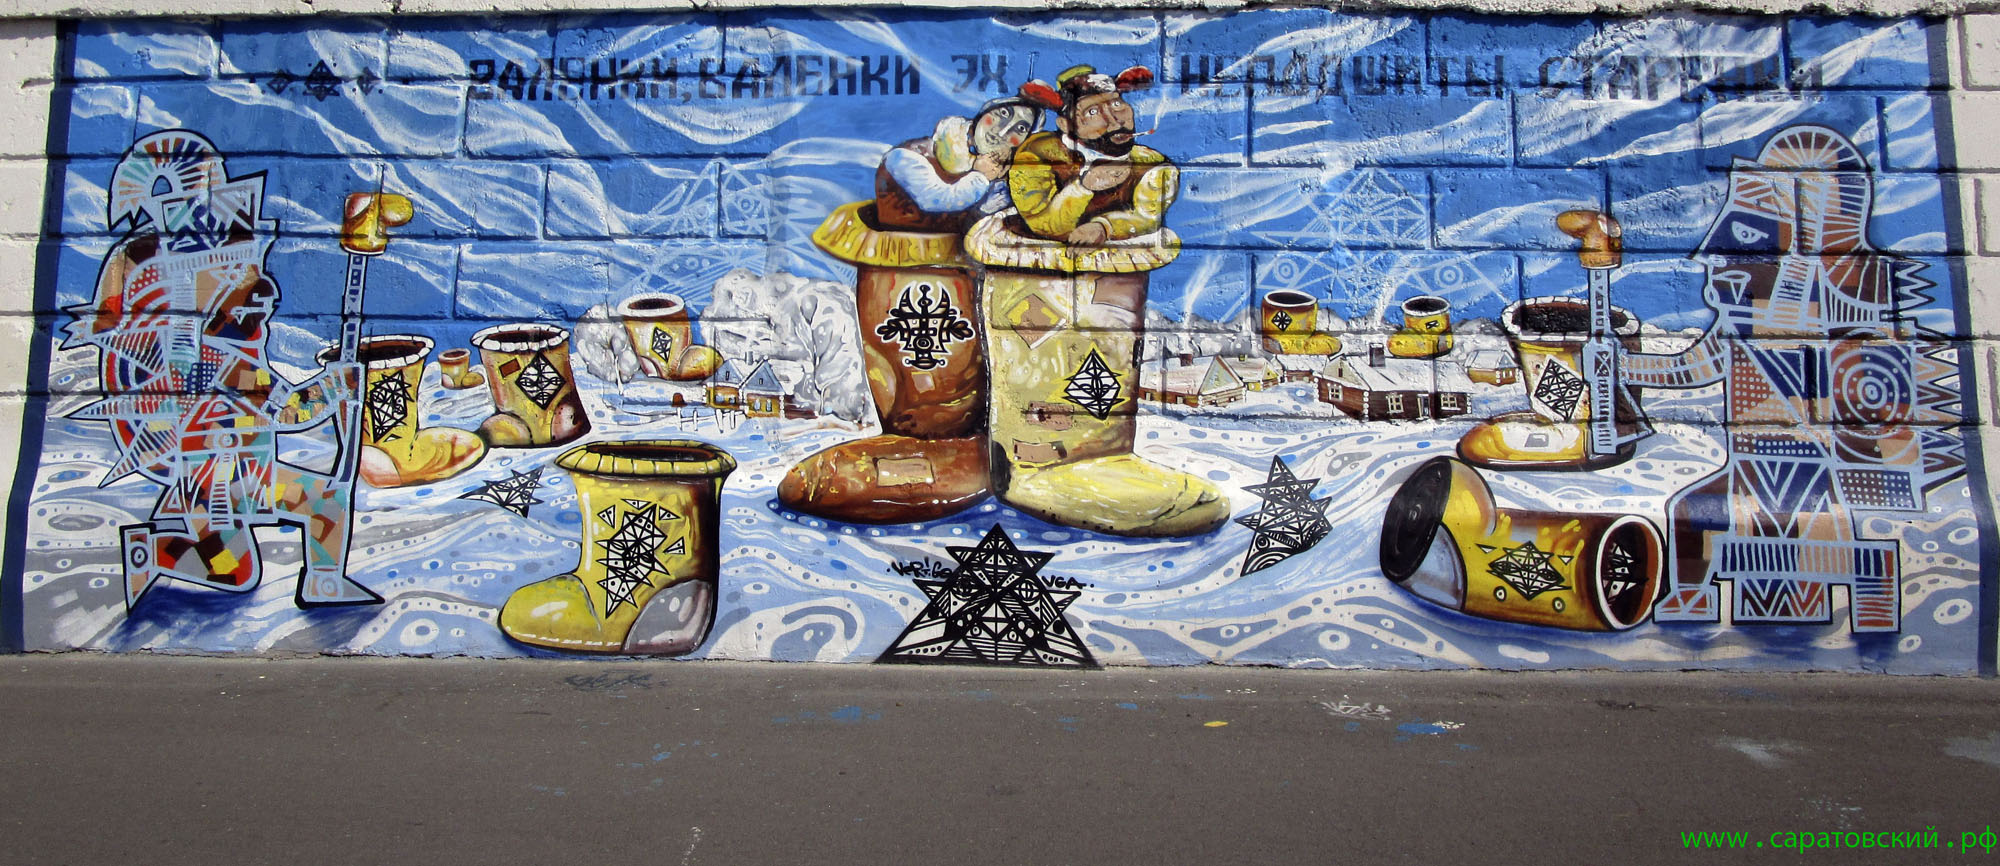 Saratov waterfront graffiti: Lidia Ruslanova's 'Valenki' song and Saratov, Russia